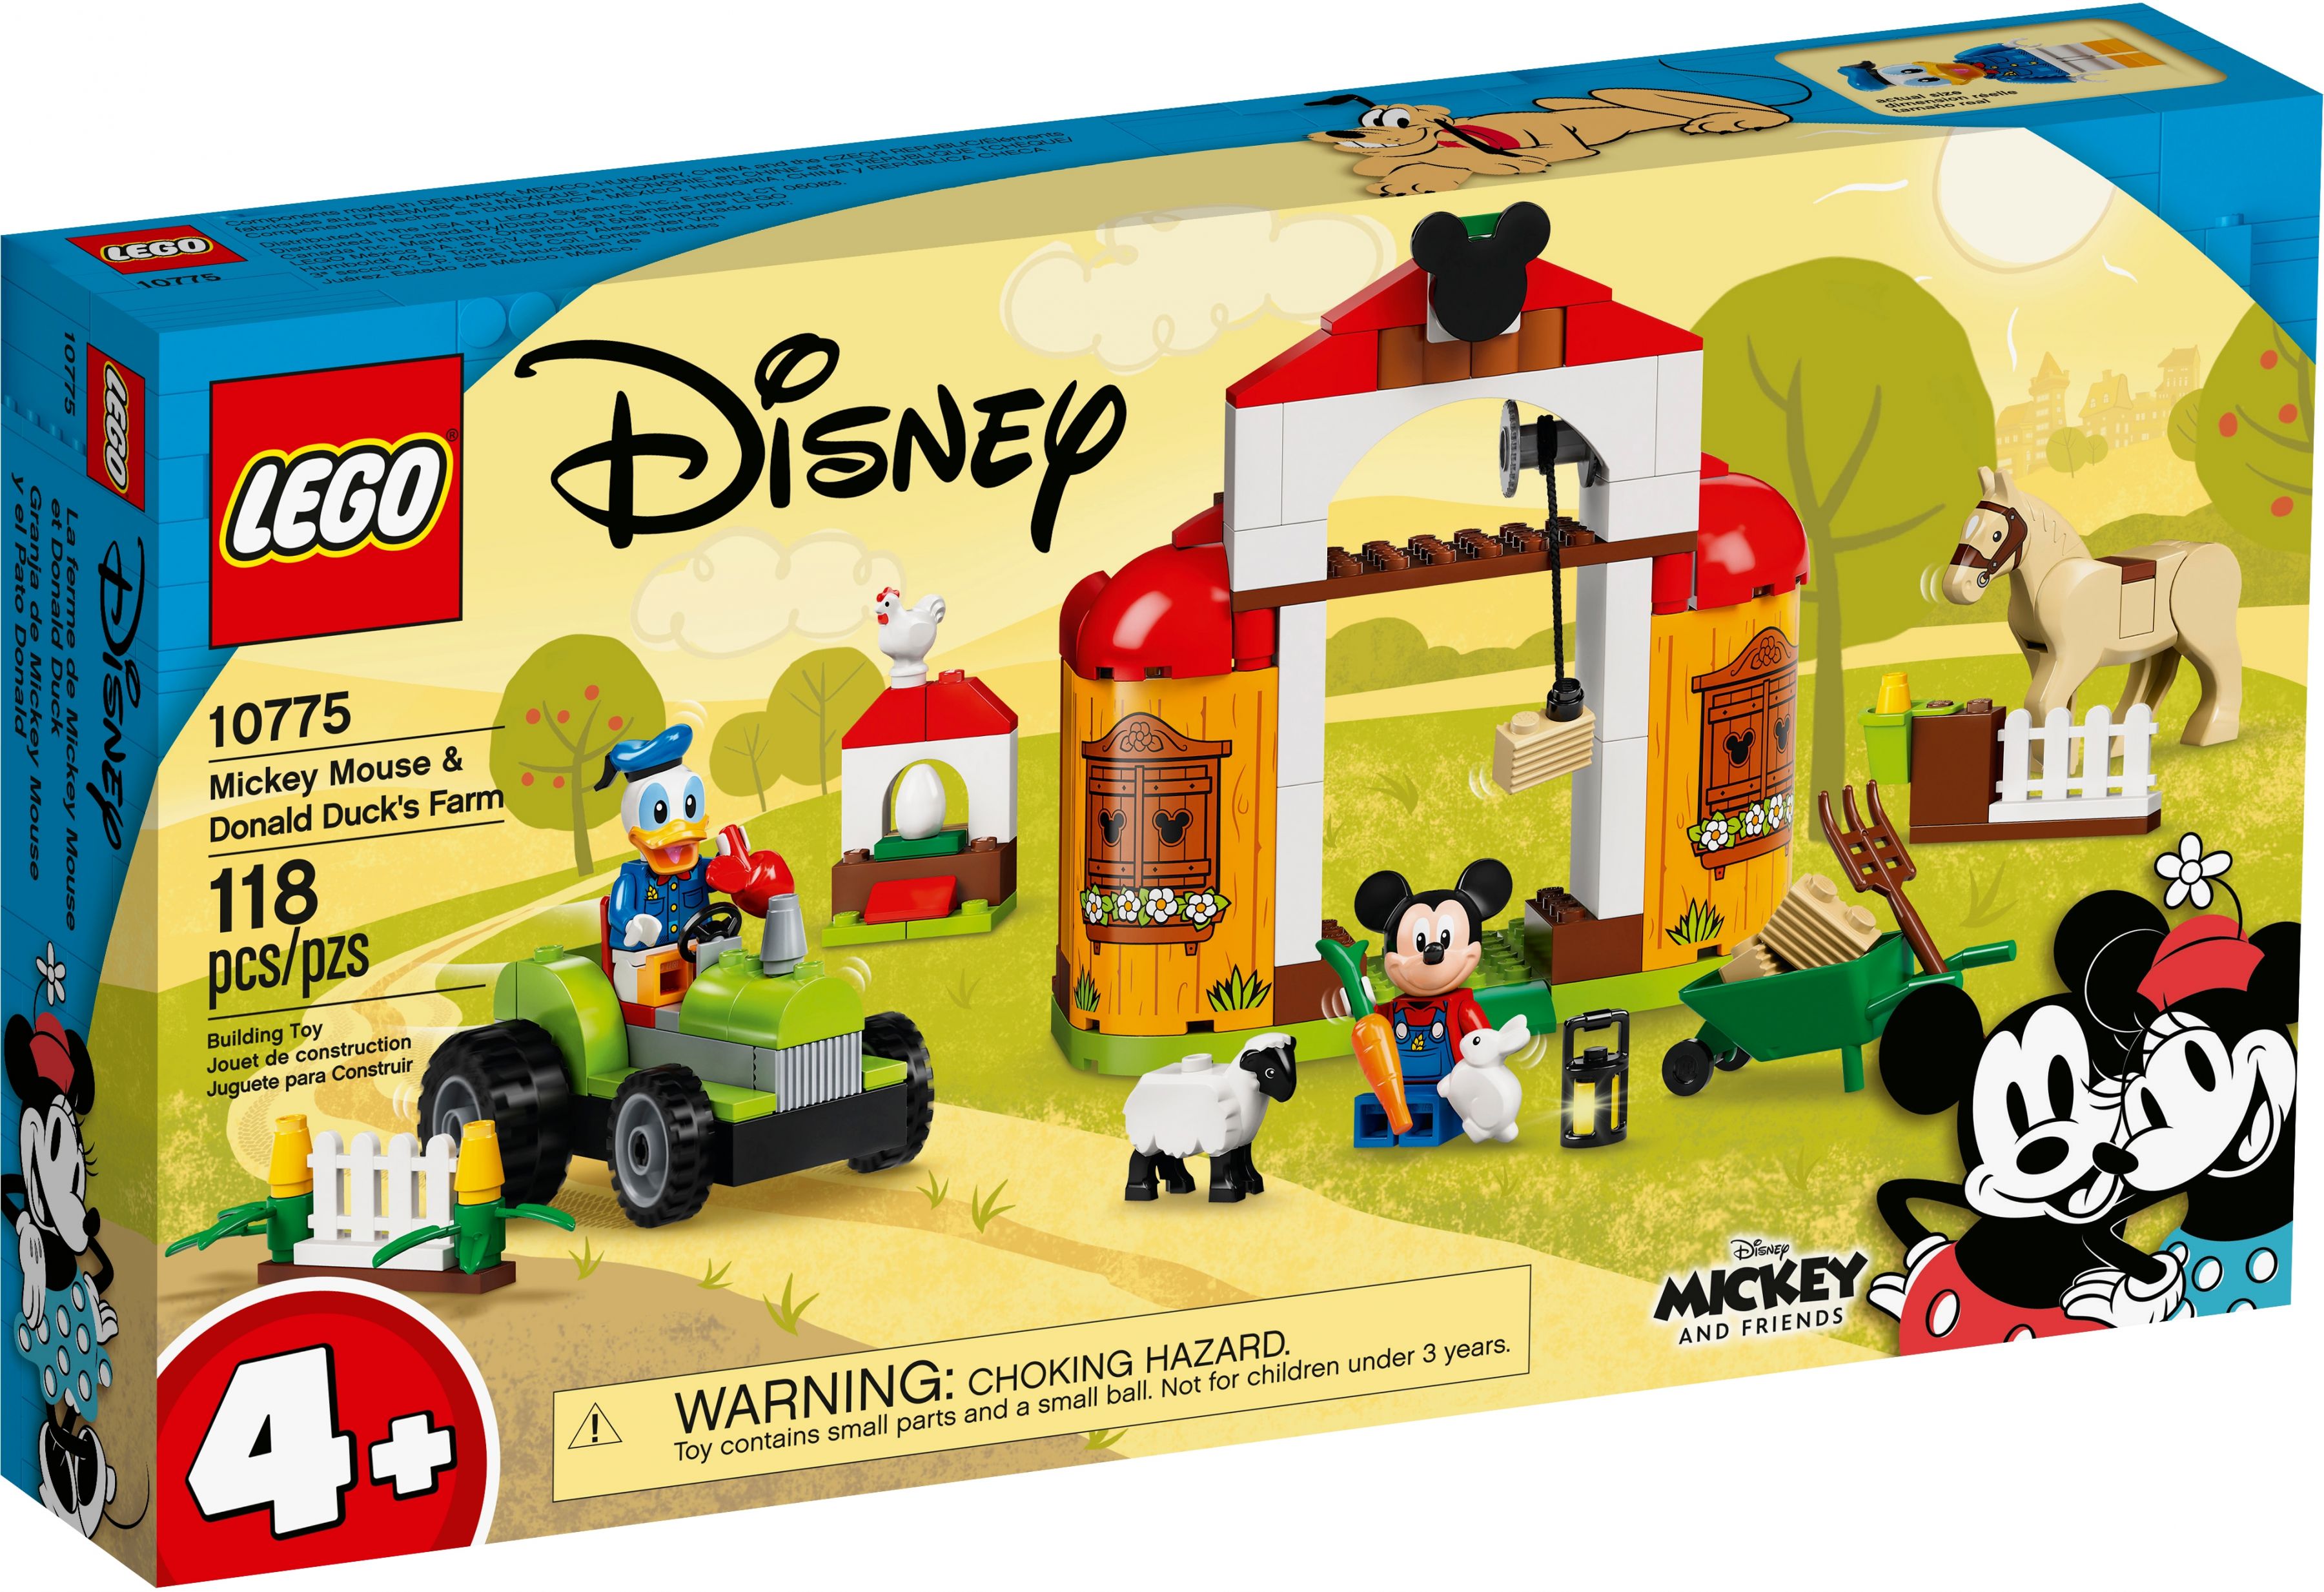 LEGO Disney 10775 Mickys und Donald Duck's Farm LEGO_10775_box1_v39.jpg